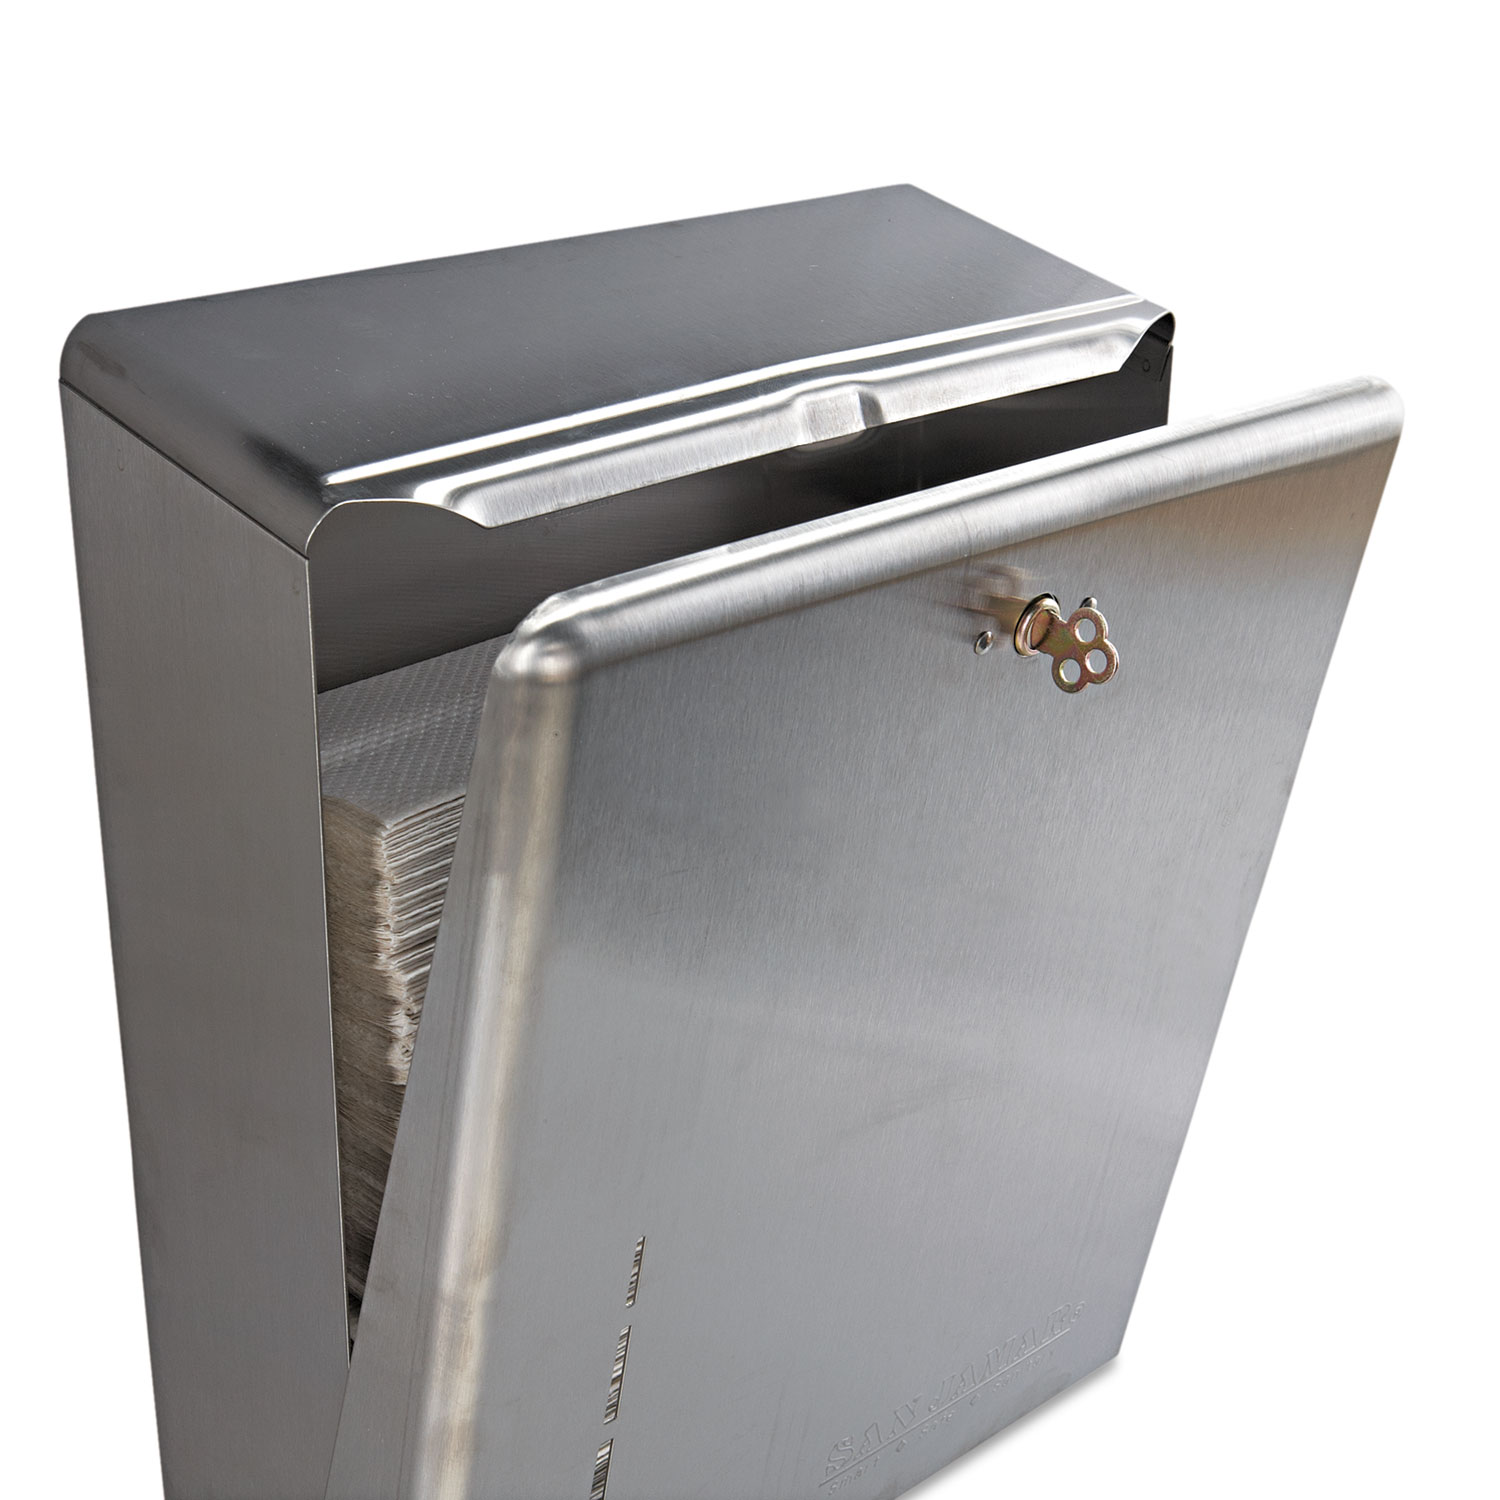 C-Fold/Multifold Towel Dispenser, Stainless Steel, 11 3/8 x 4 x 14 3/4